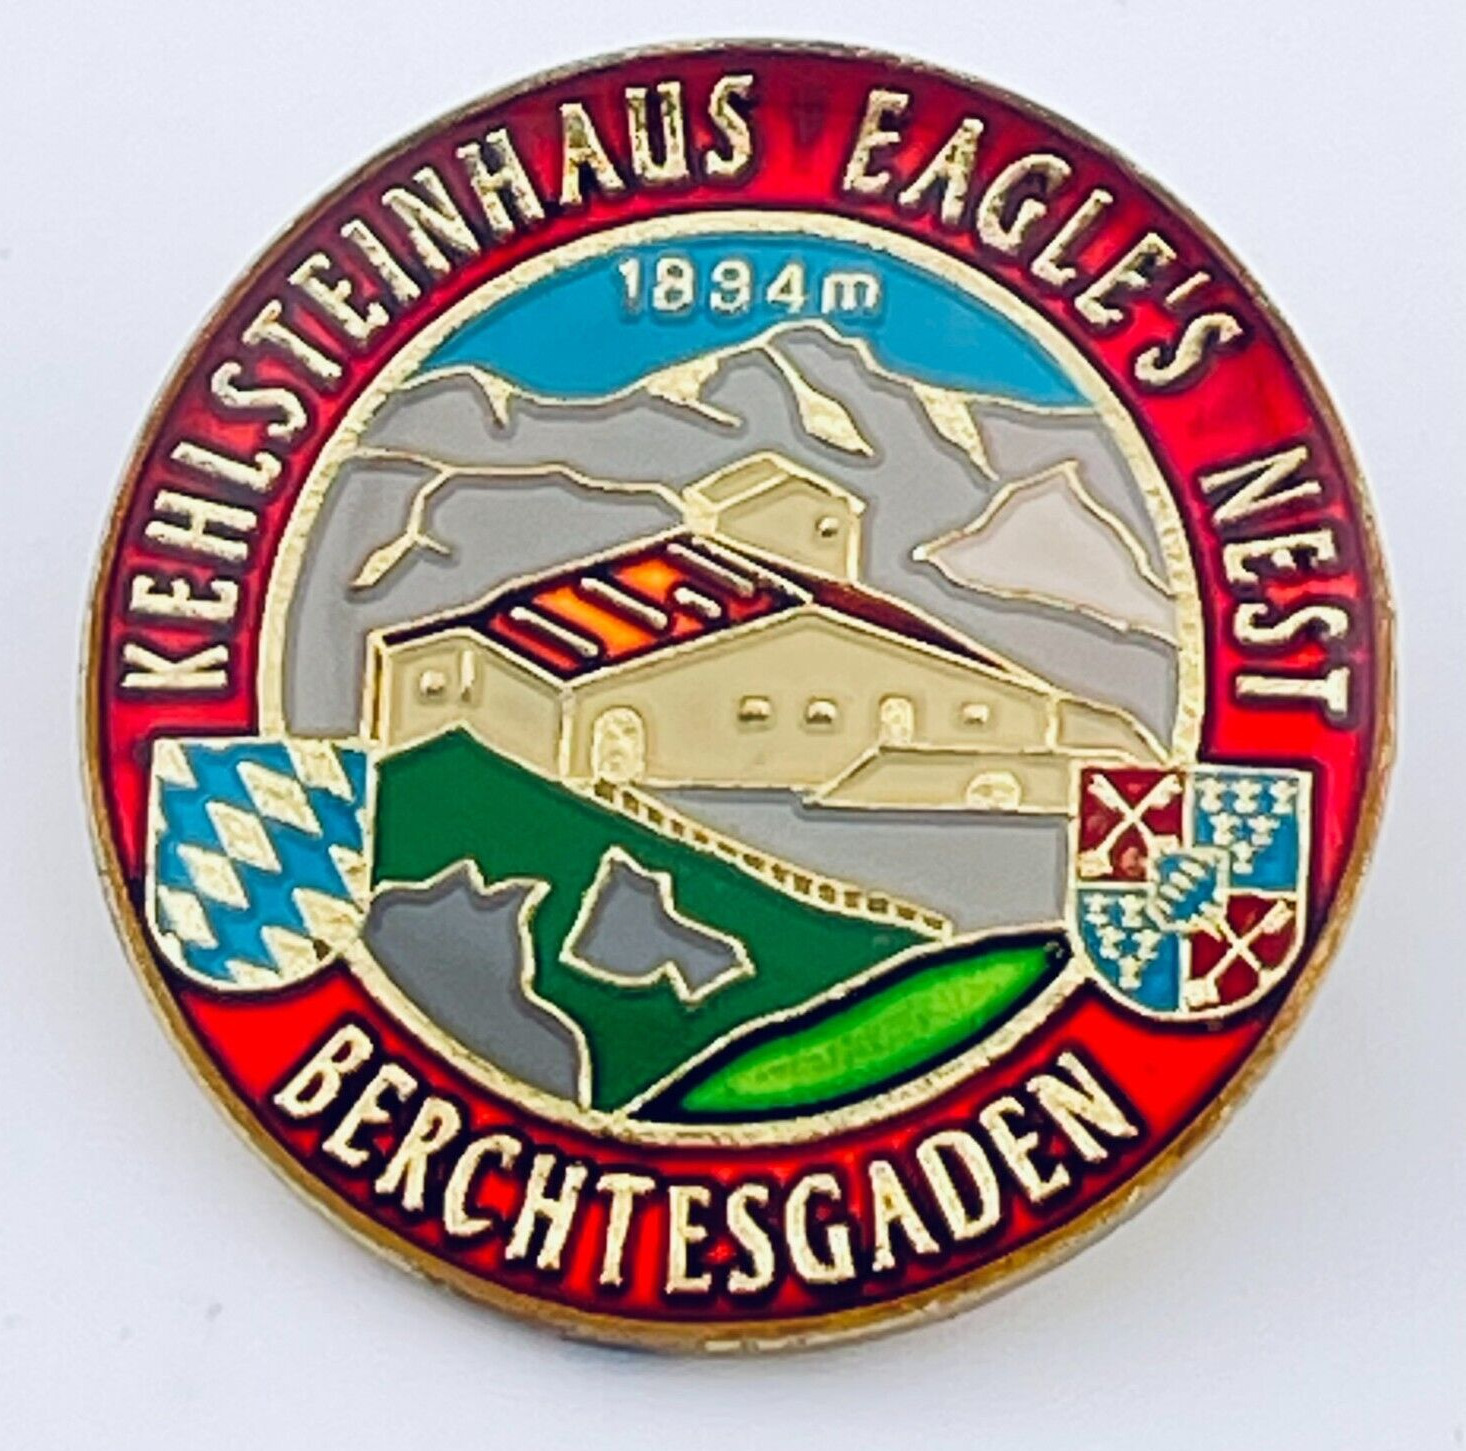 Vintage Kehlsteinhaus Eagles Nest Berchtesgaden Lapel Pin